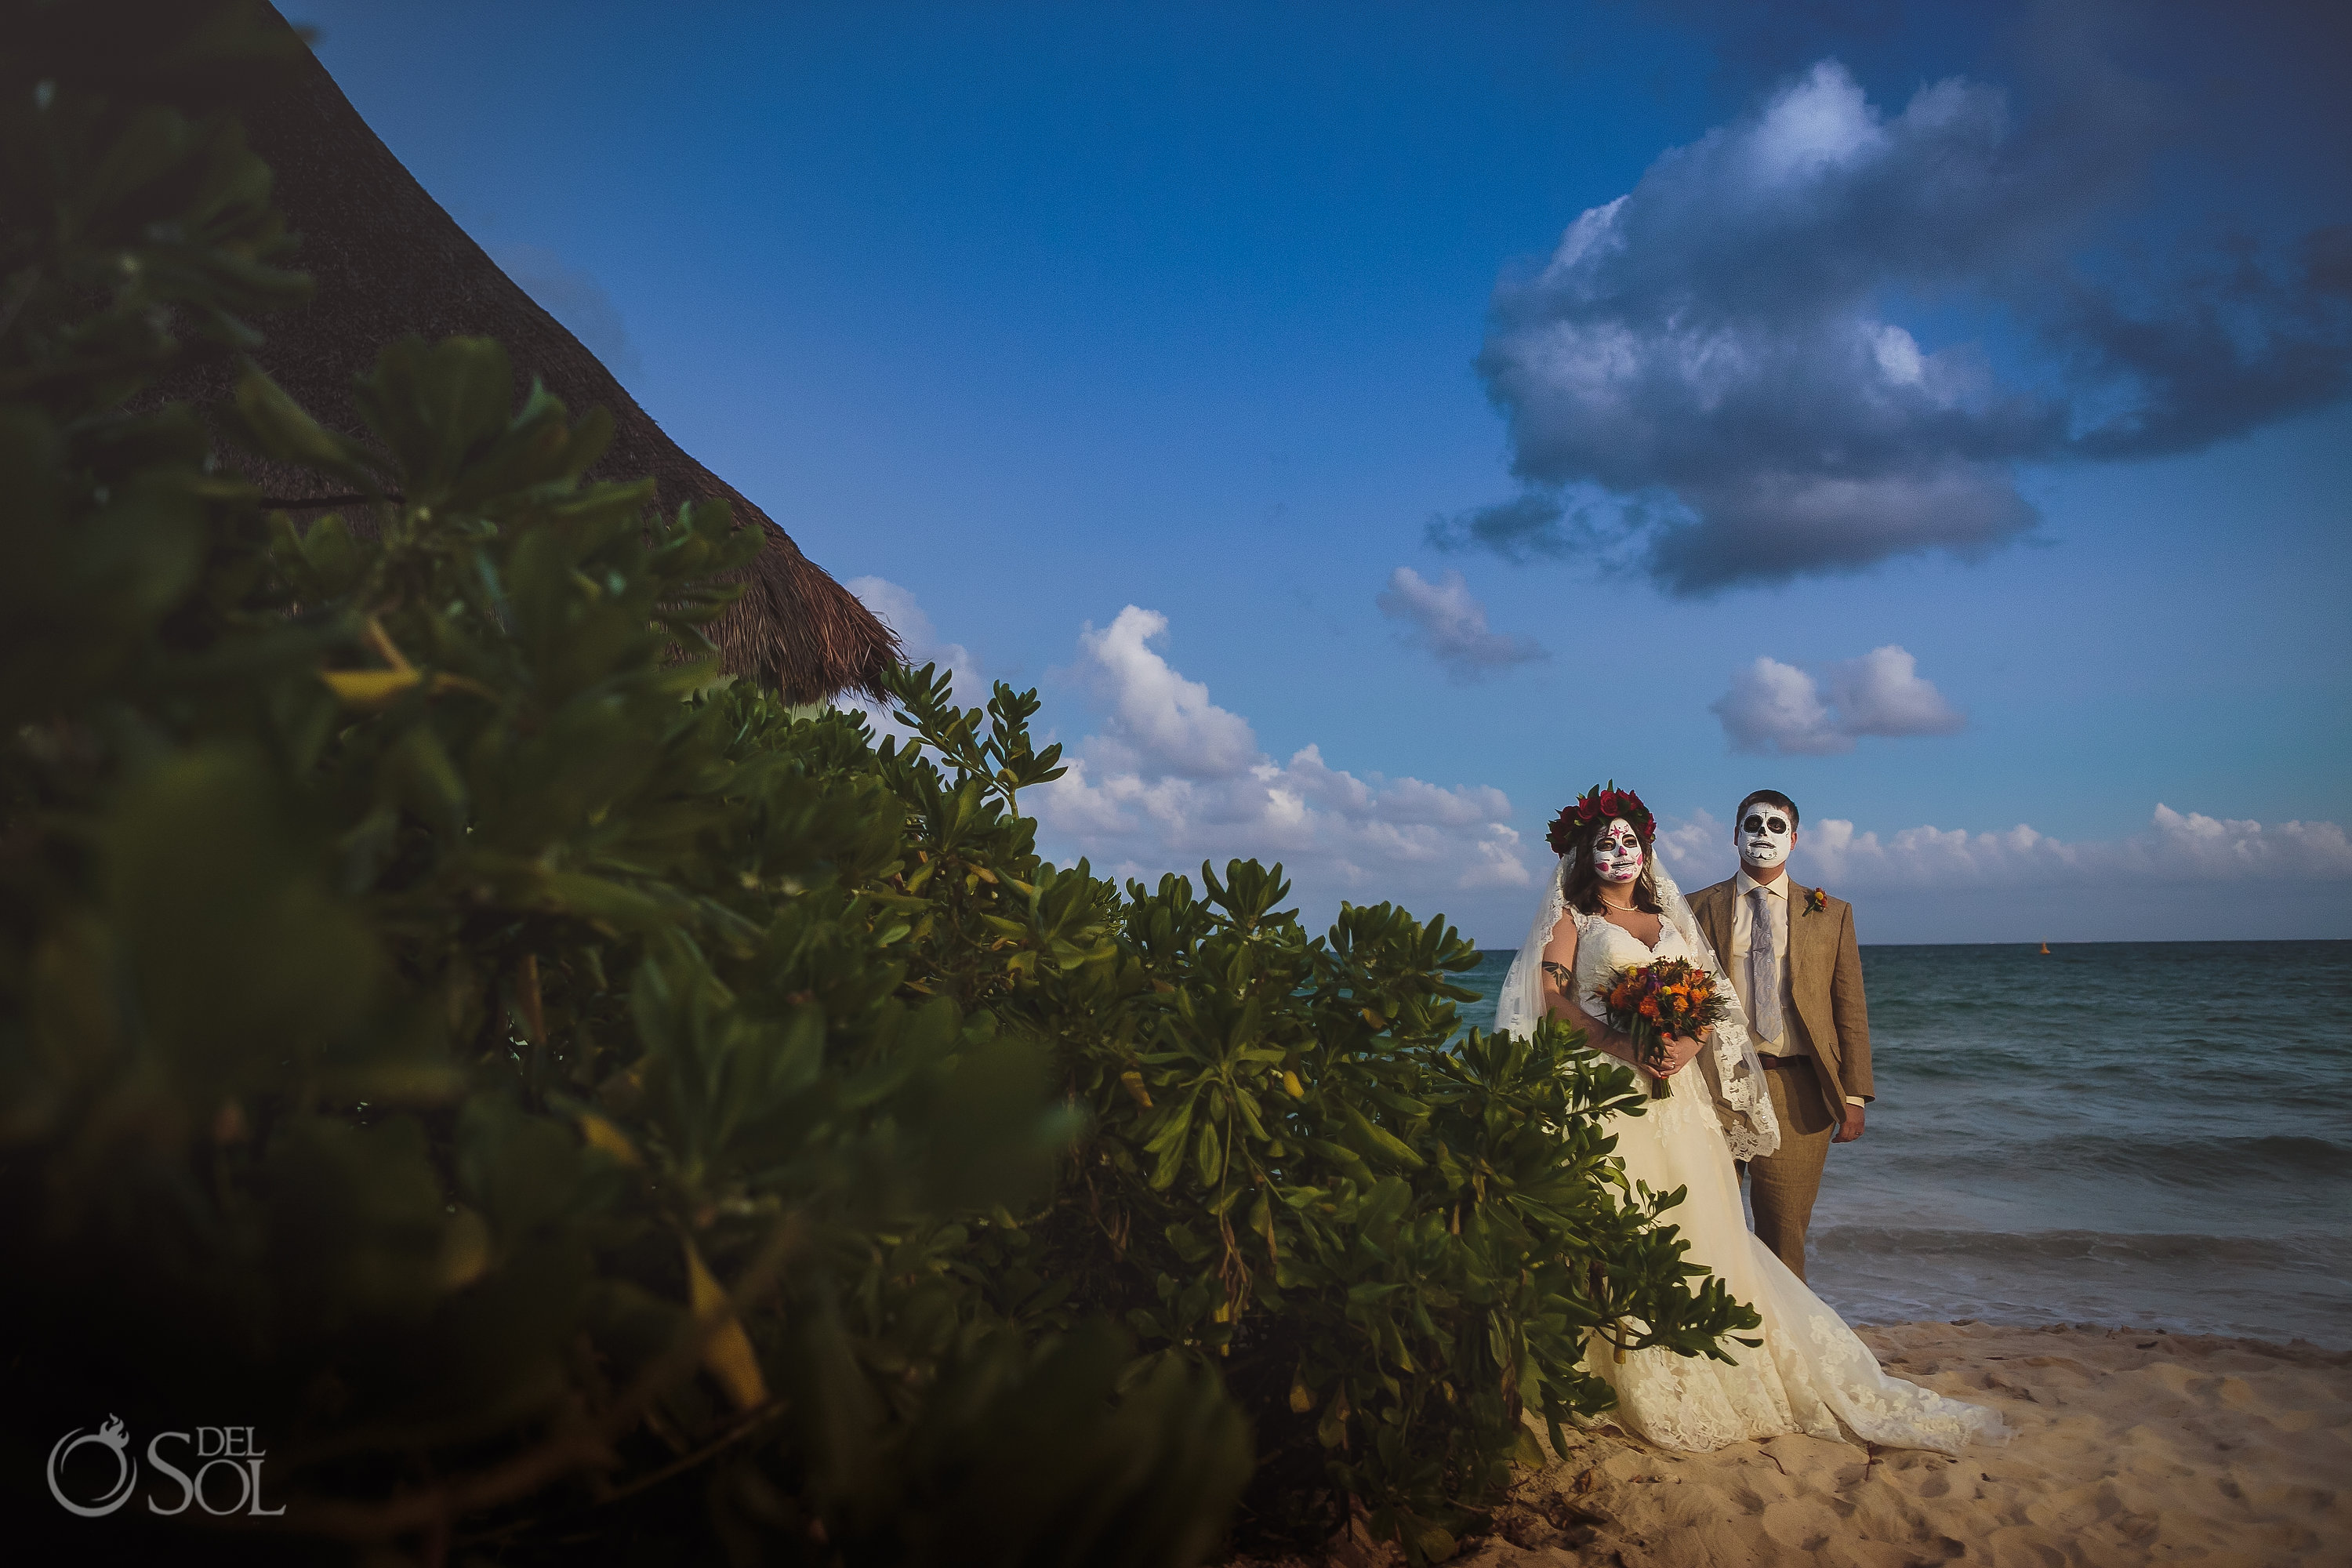 Playa del Carmen 38 Street Beach Newlyweds Day of the dead wedding Catrina makeup bride groom Mexico